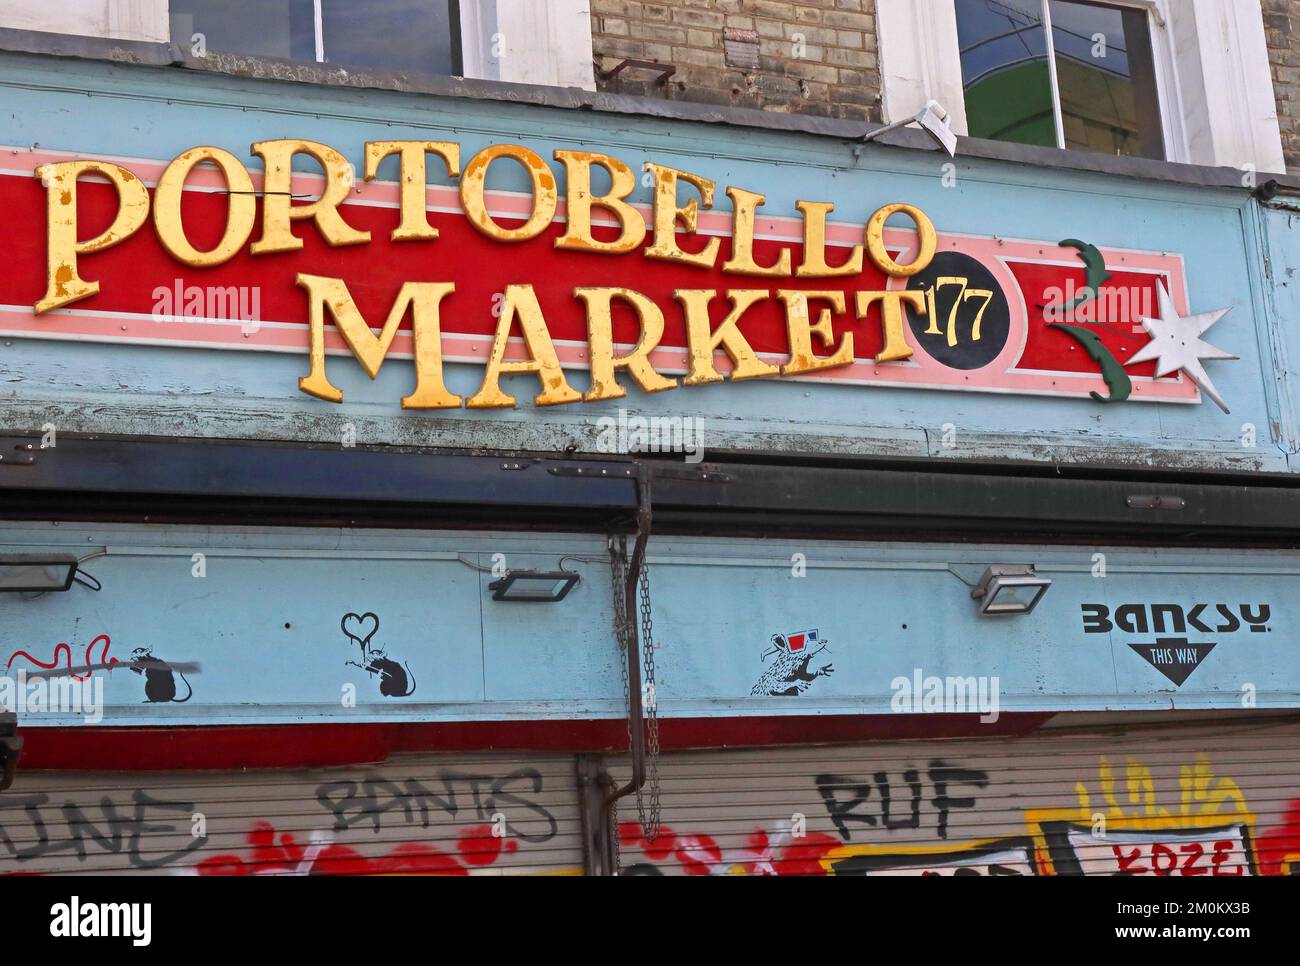 Portobello Market, 177 Portobello Road, Notting Hill, London, UK, W11 2DY Stock Photo